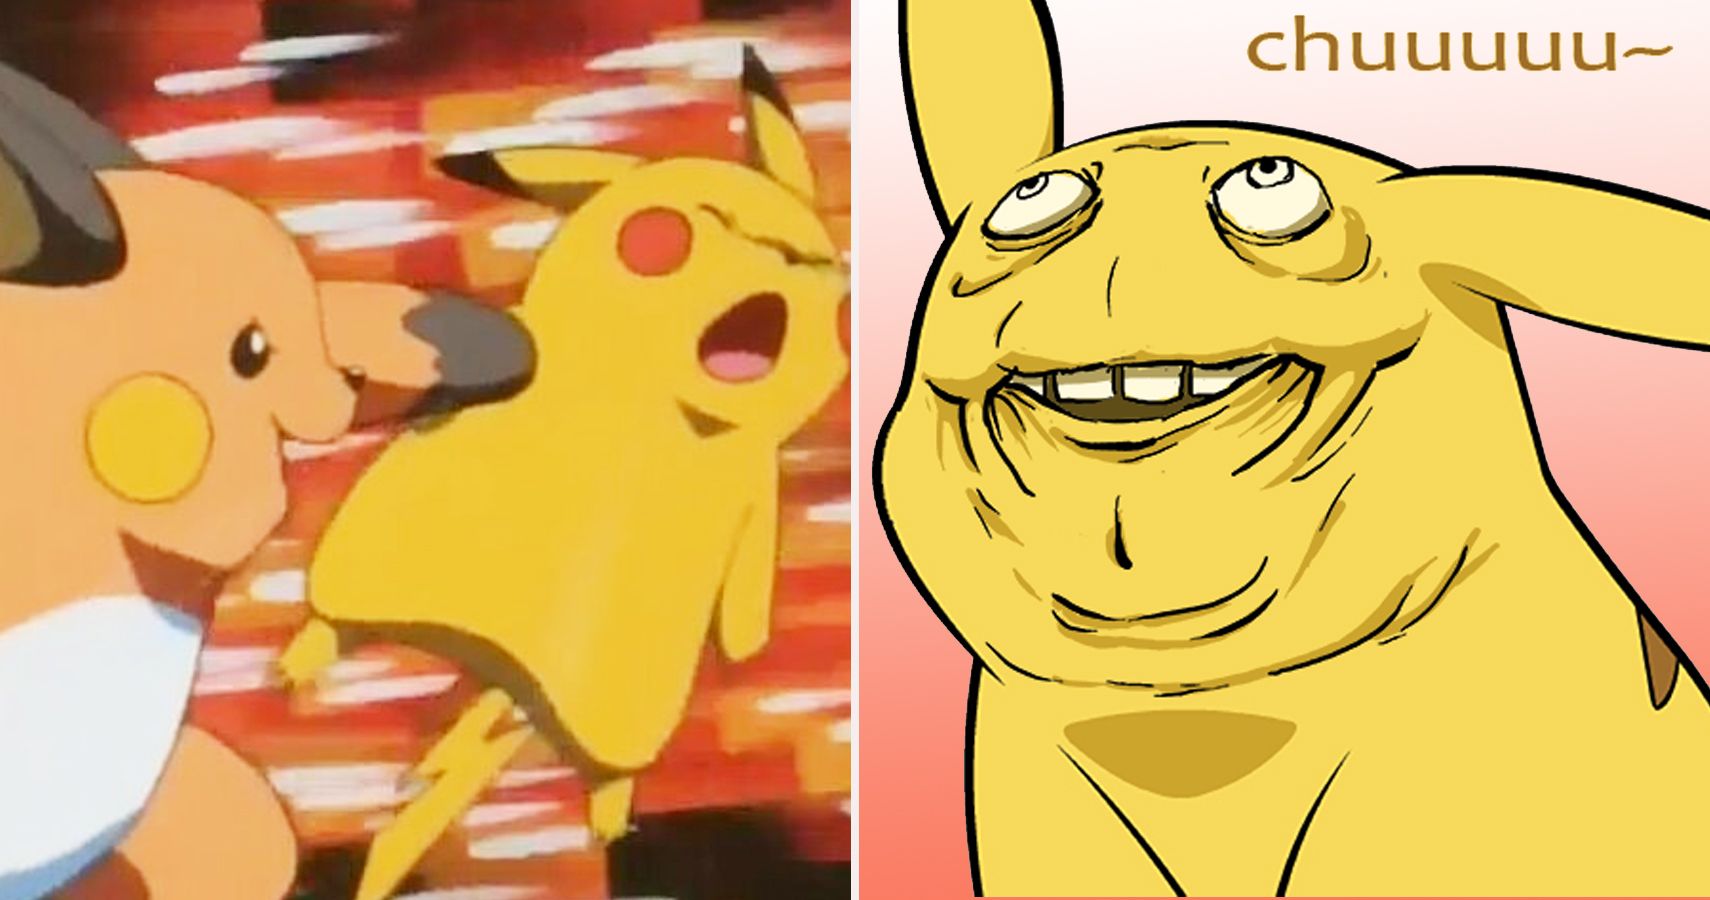 Why Pikachu Won't Evolve In Pokémon Yellow